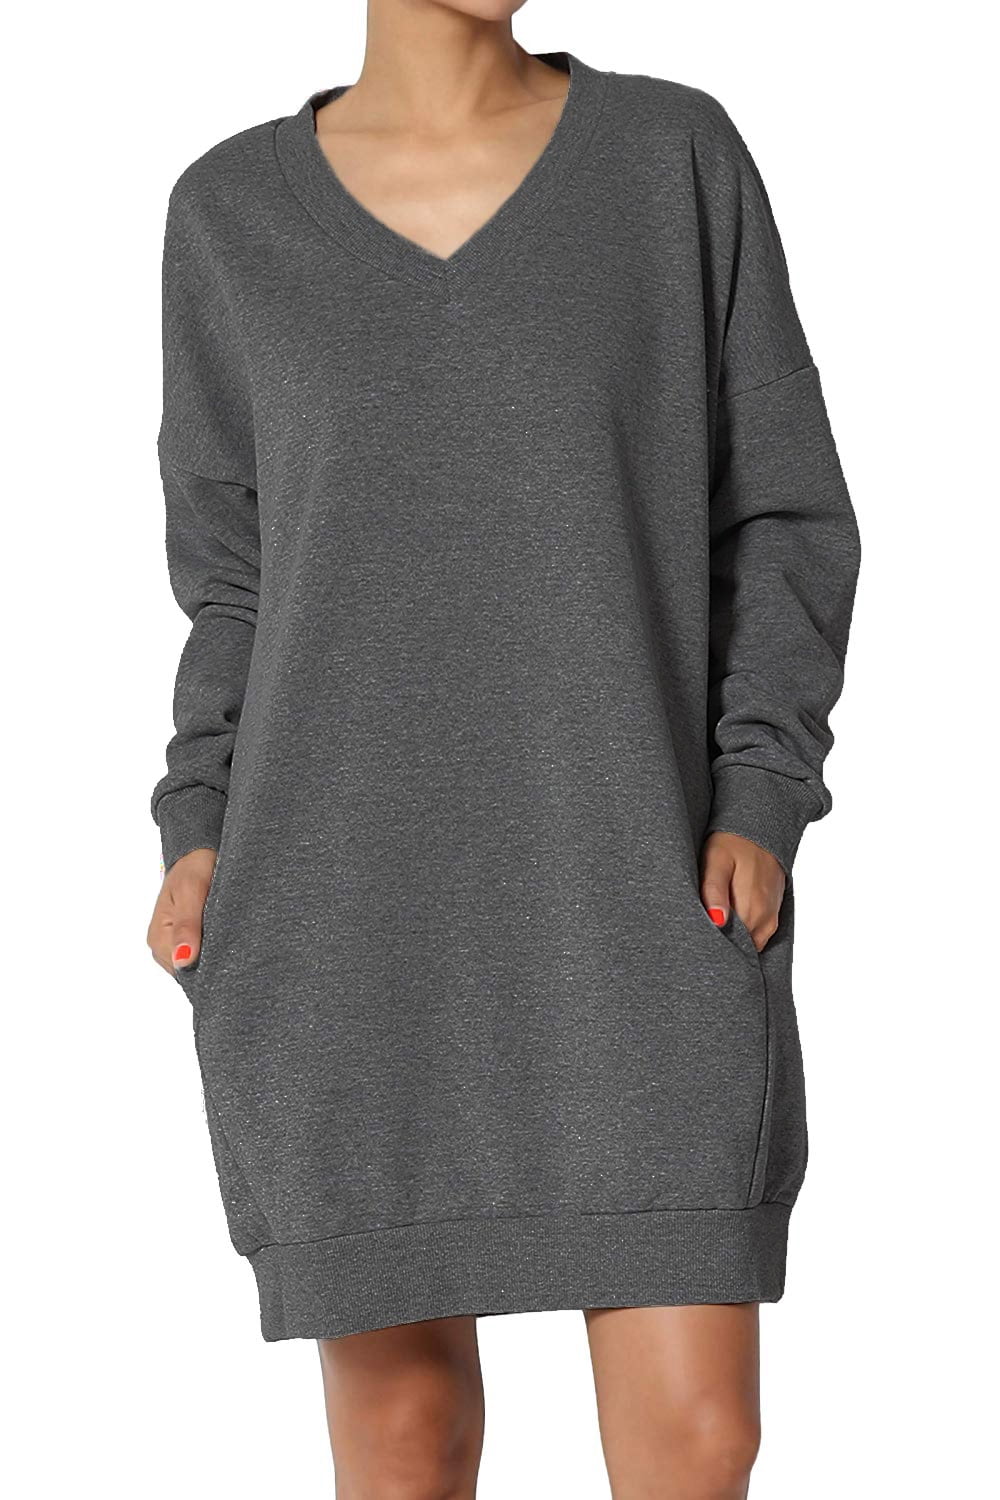 Haute Edition Women's Oversized Pullover Sweatshirt Dress - Walmart.com